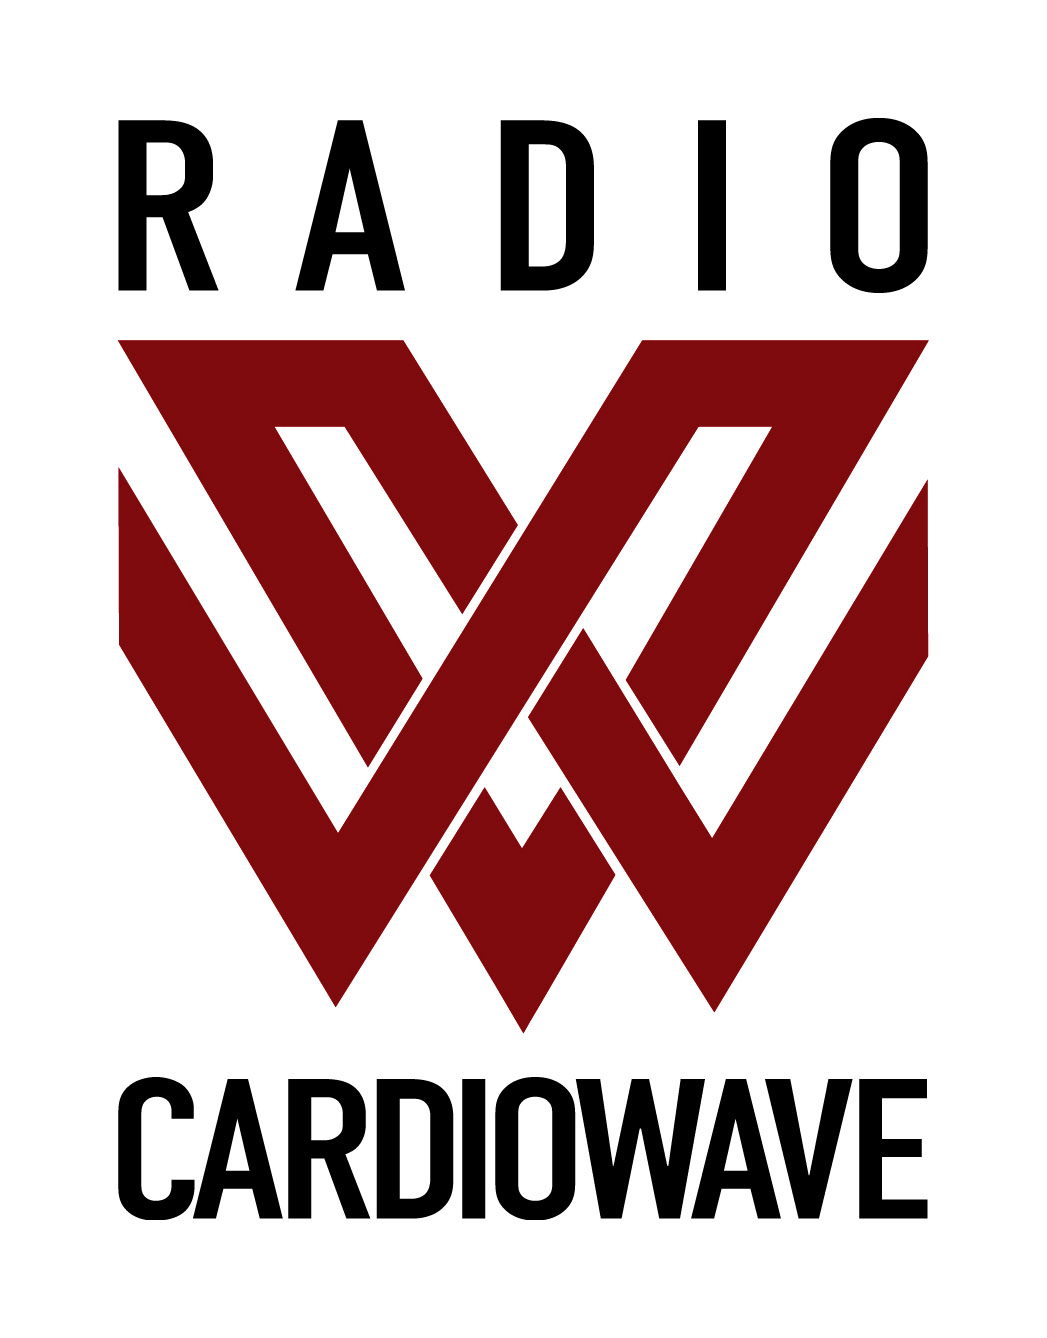 Radio Cardiowave